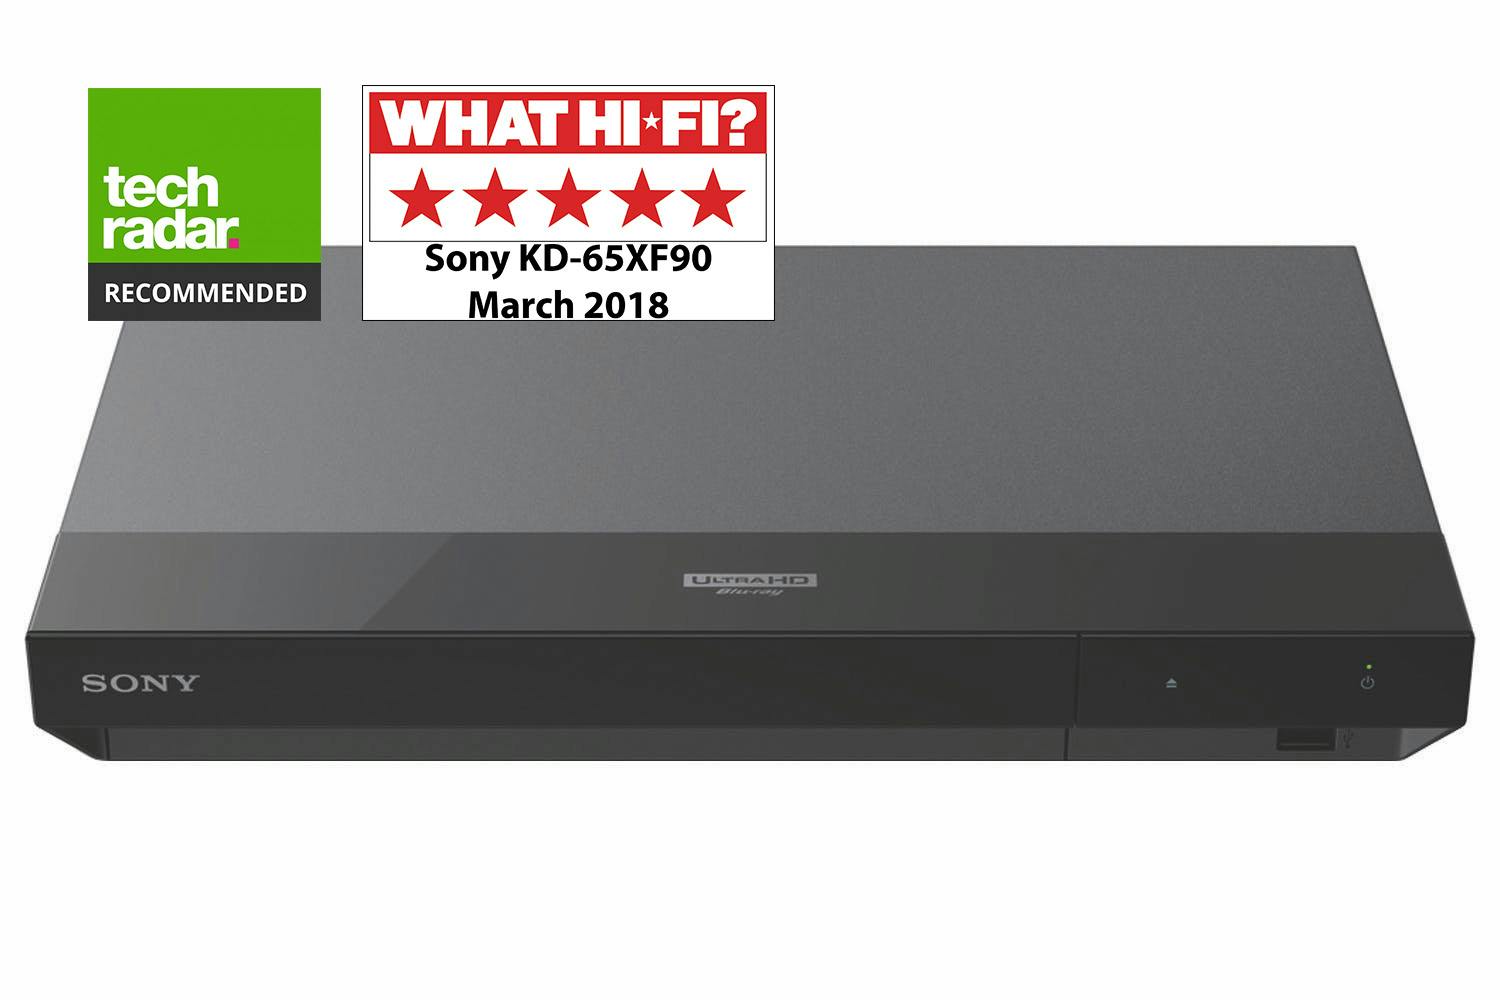 Reproductor de Blu-ray™ 4K Ultra HD, UBP-X700